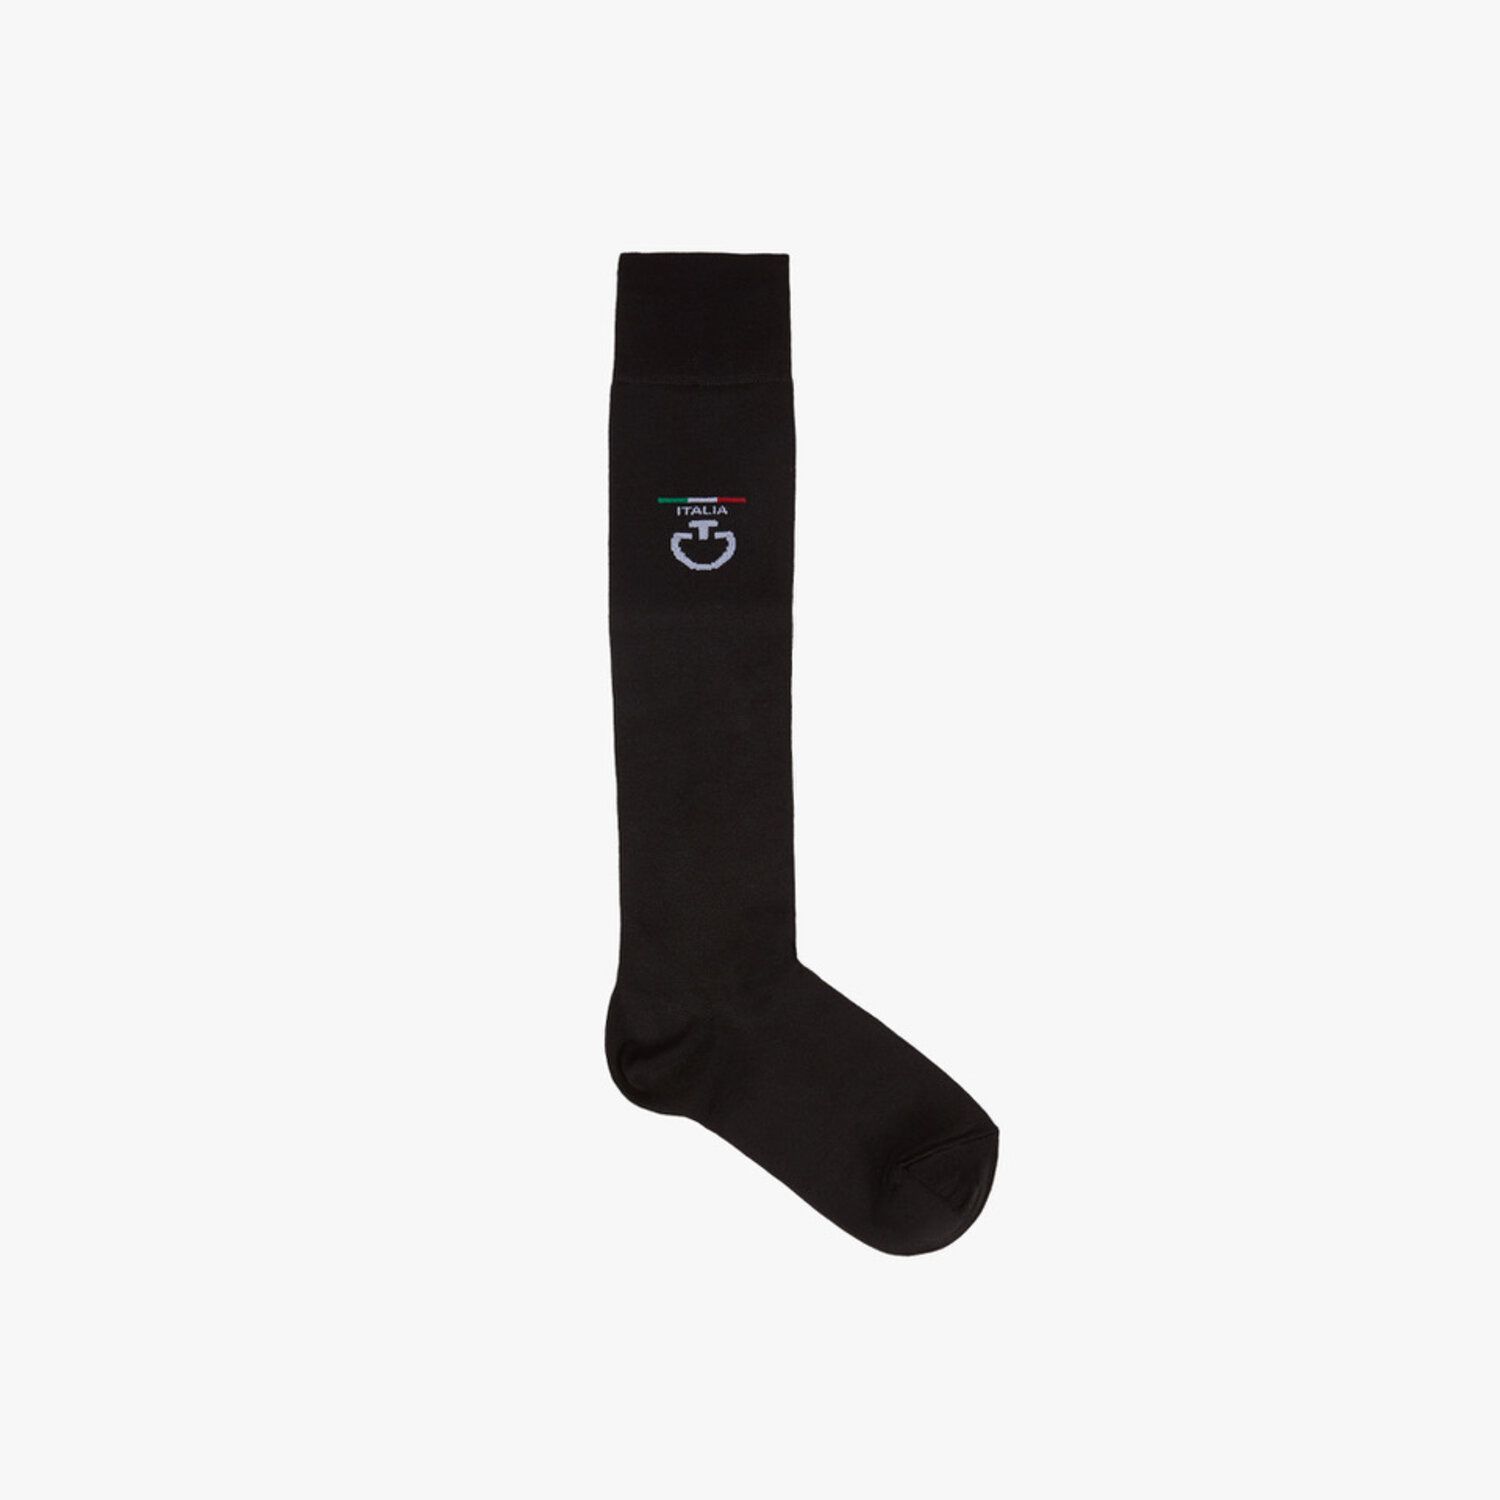 Cavalleria Toscana FISE Sports socks BLACK-2